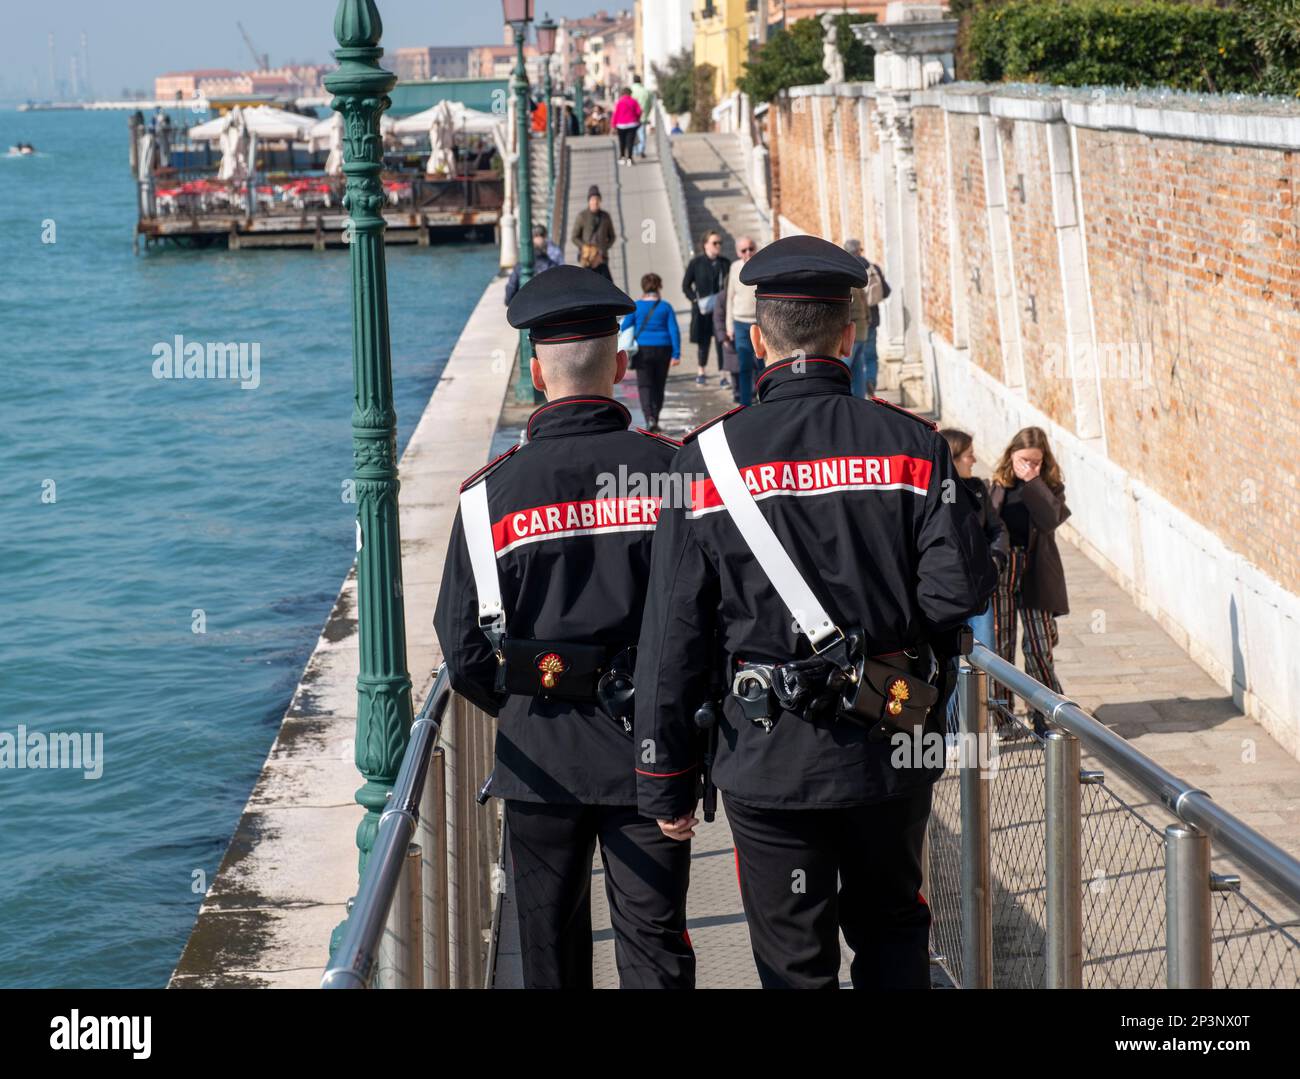 Carabinieri on patrol the embankment of the Fondamenta Zattere Al Gesuiti, Venice, Italy. Stock Photo